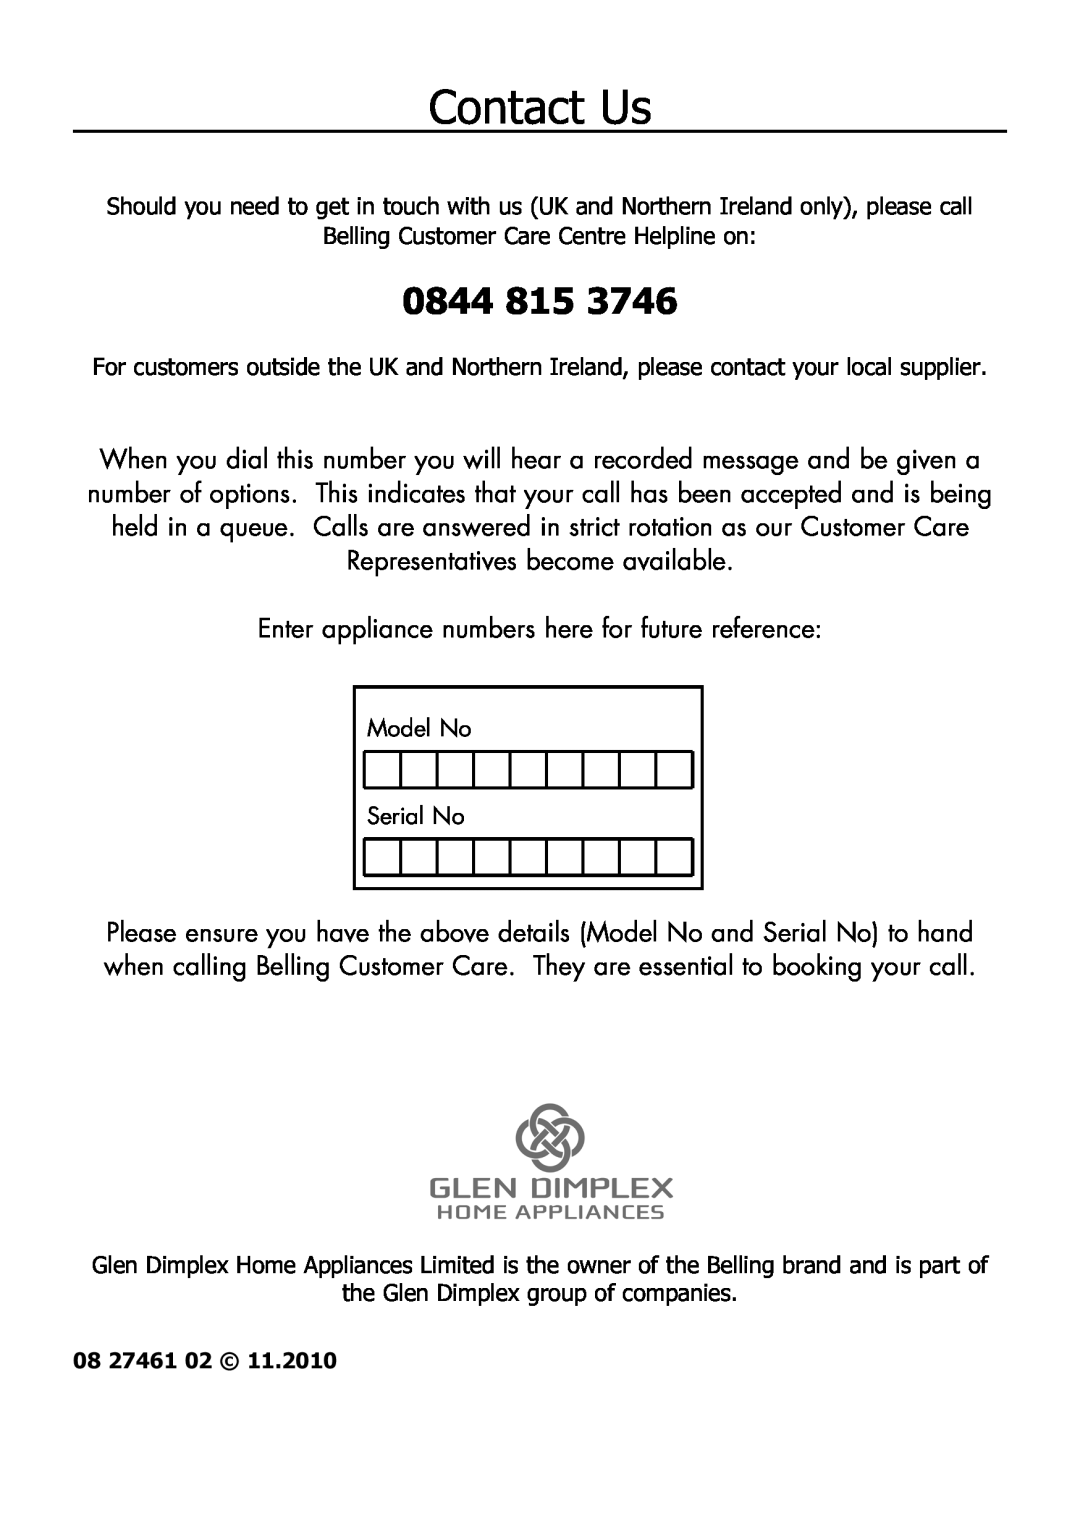 Glen Dimplex Home Appliances Ltd FS 60 DO DF manual Contact Us, 0844 815 